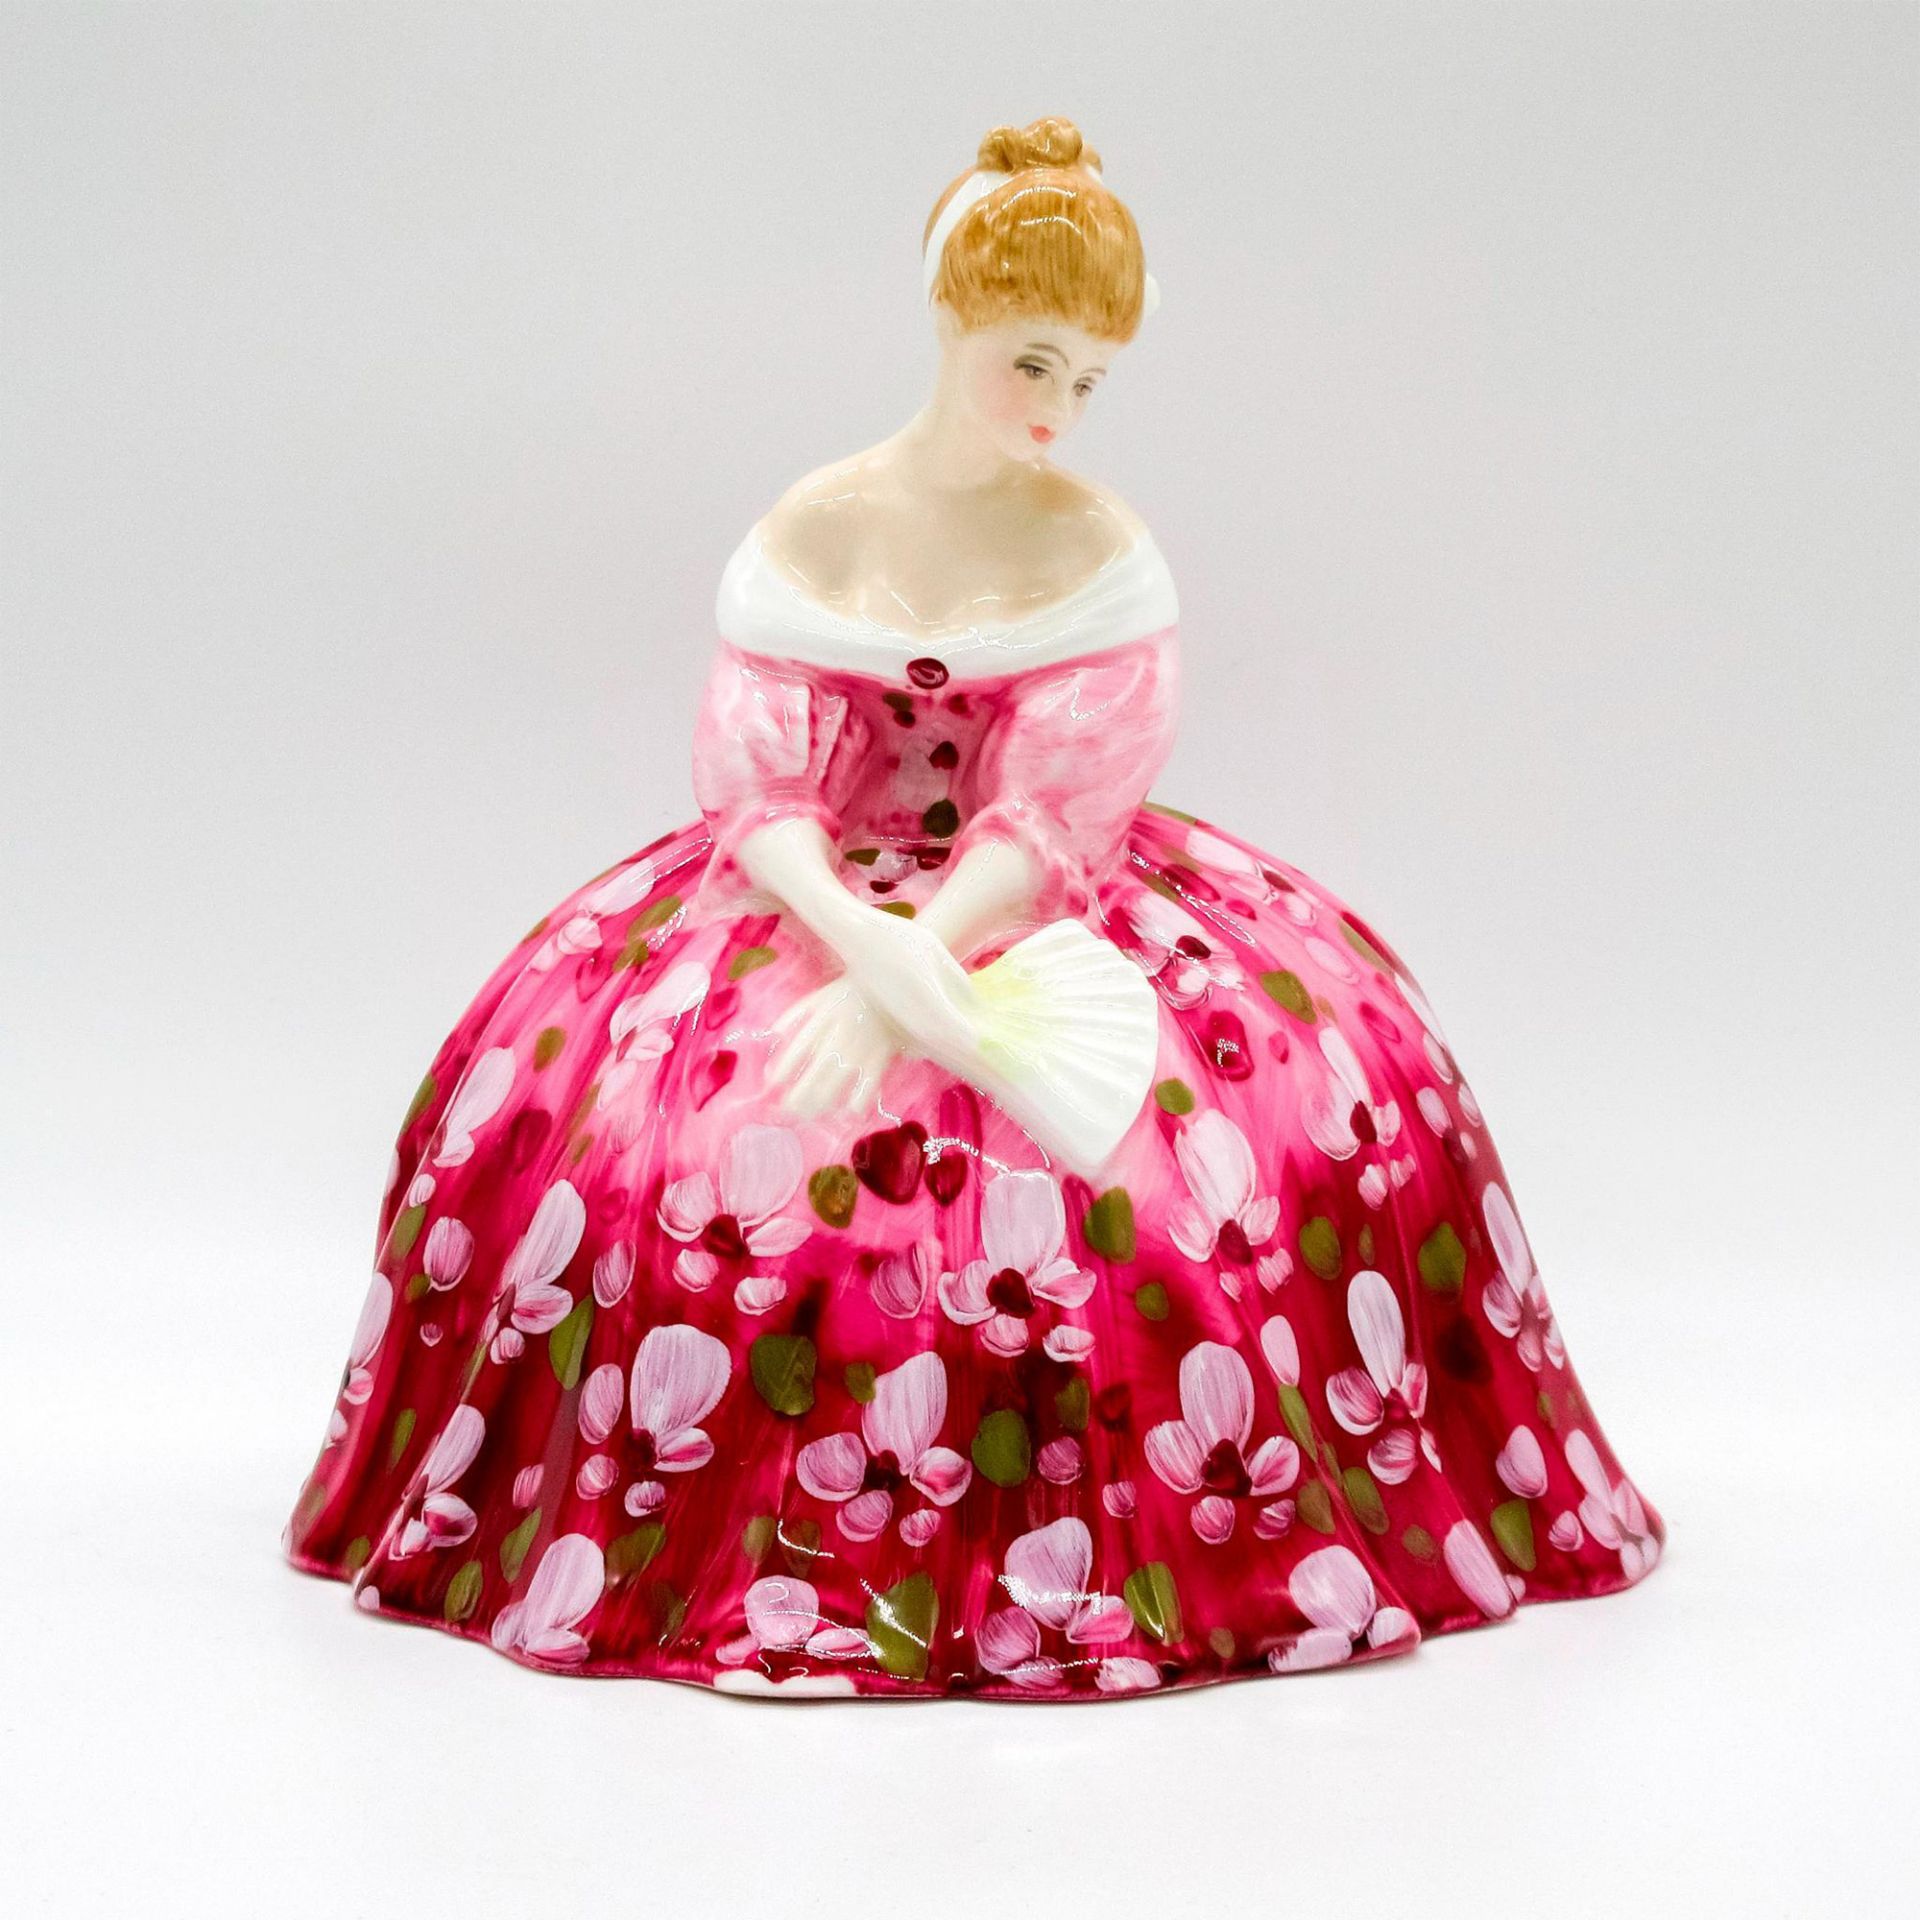 Victoria - HN2471 - Royal Doulton Figurine